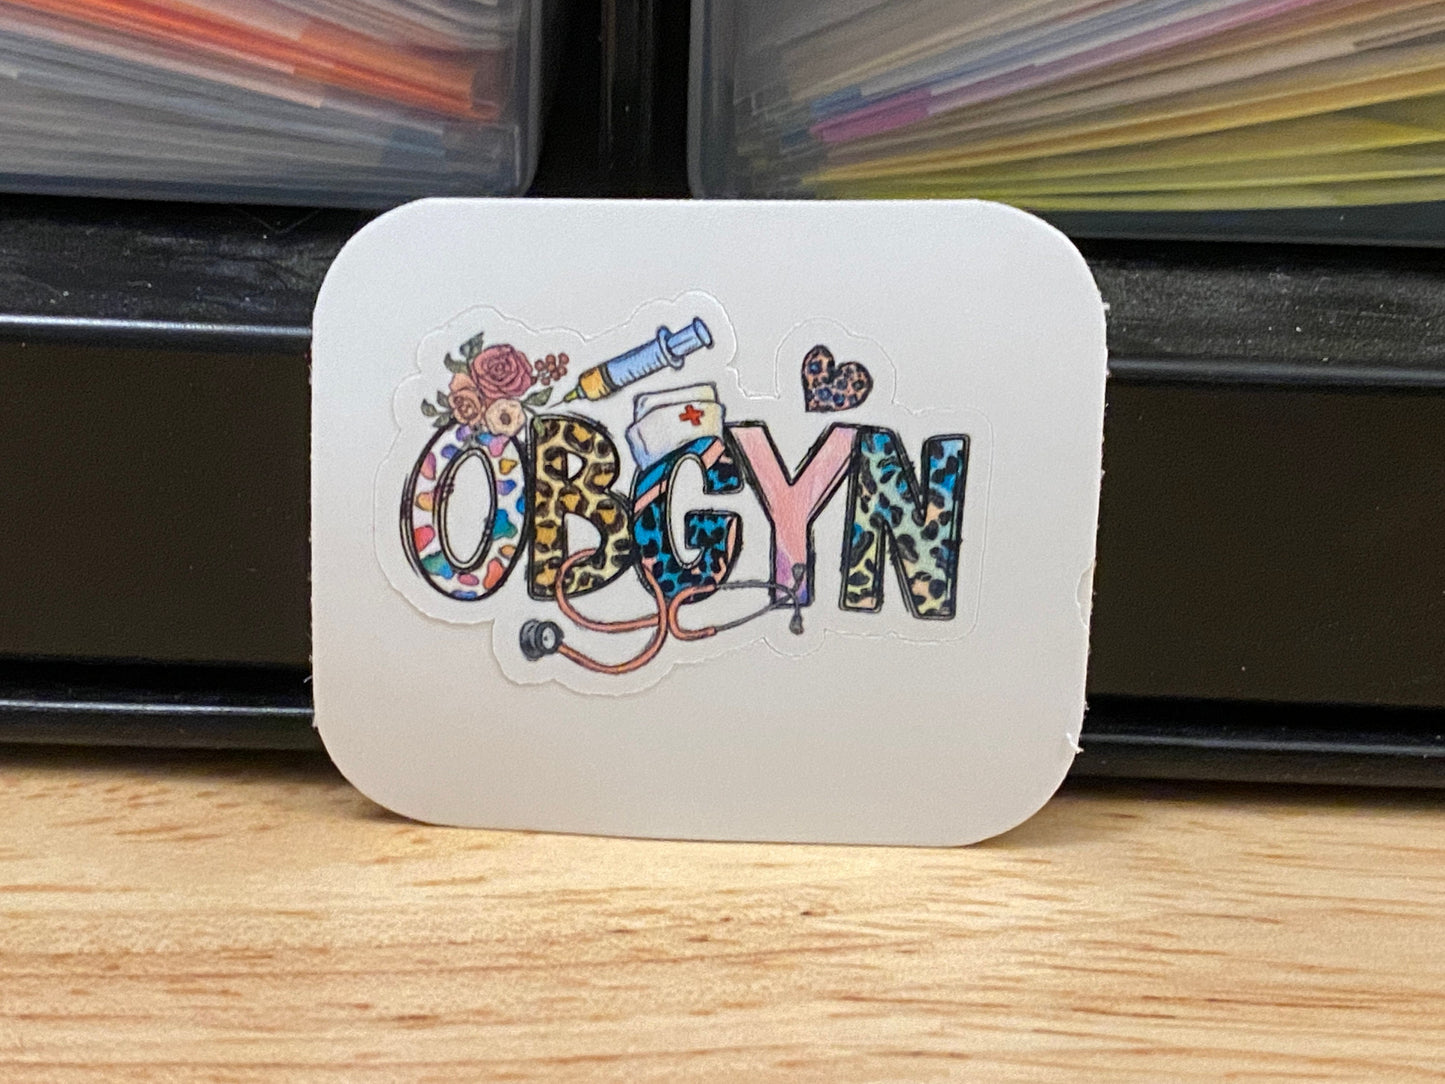 OBGYN Sticker, Obstetrics and Gynecology Sticker, Medical STICKER, Cute Medical Design Sticker, Doctor OB Sticker